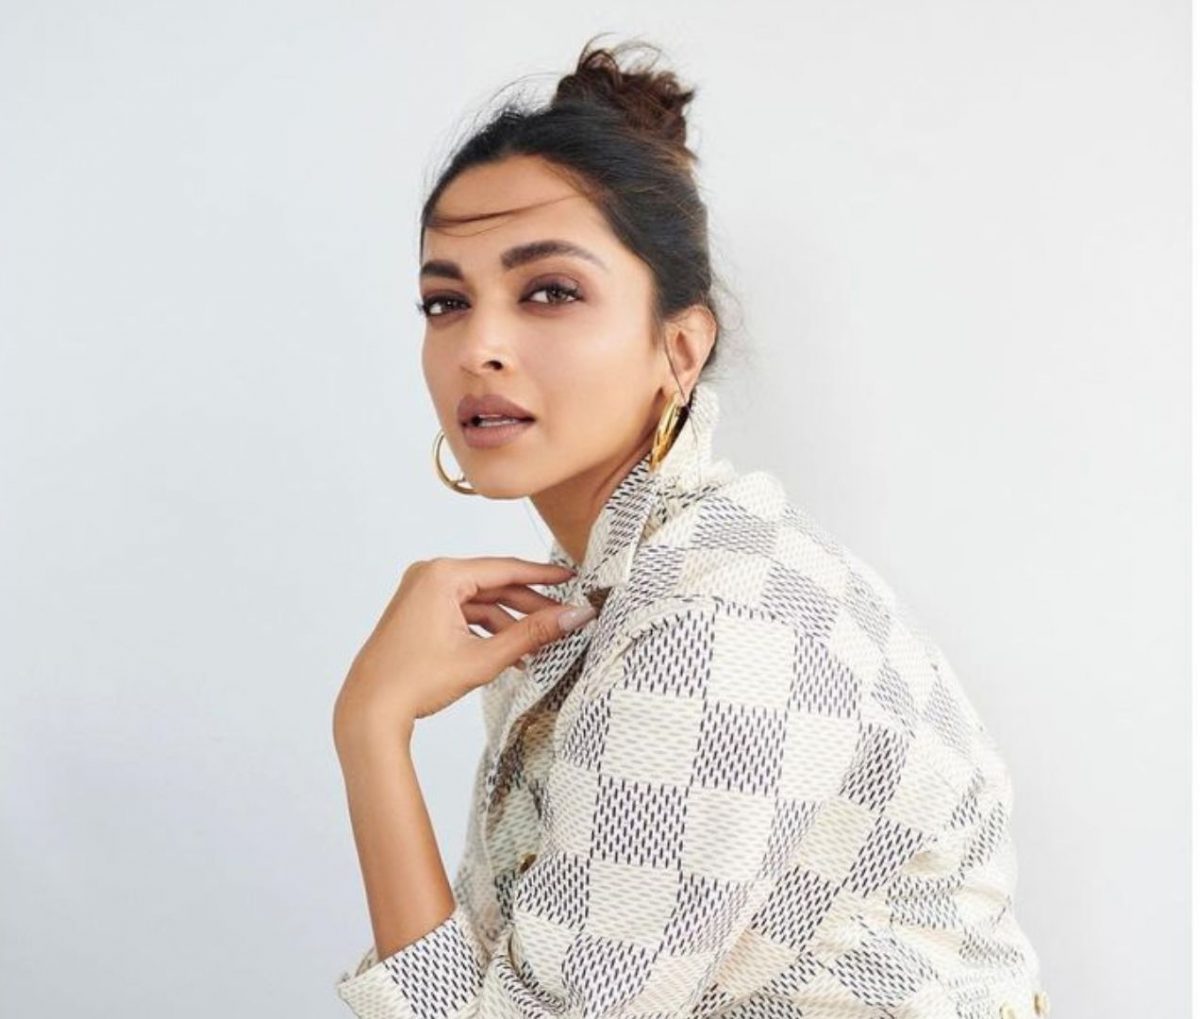 Deepika Padukone Is Louis Vuitton's Newest Brand Ambassador